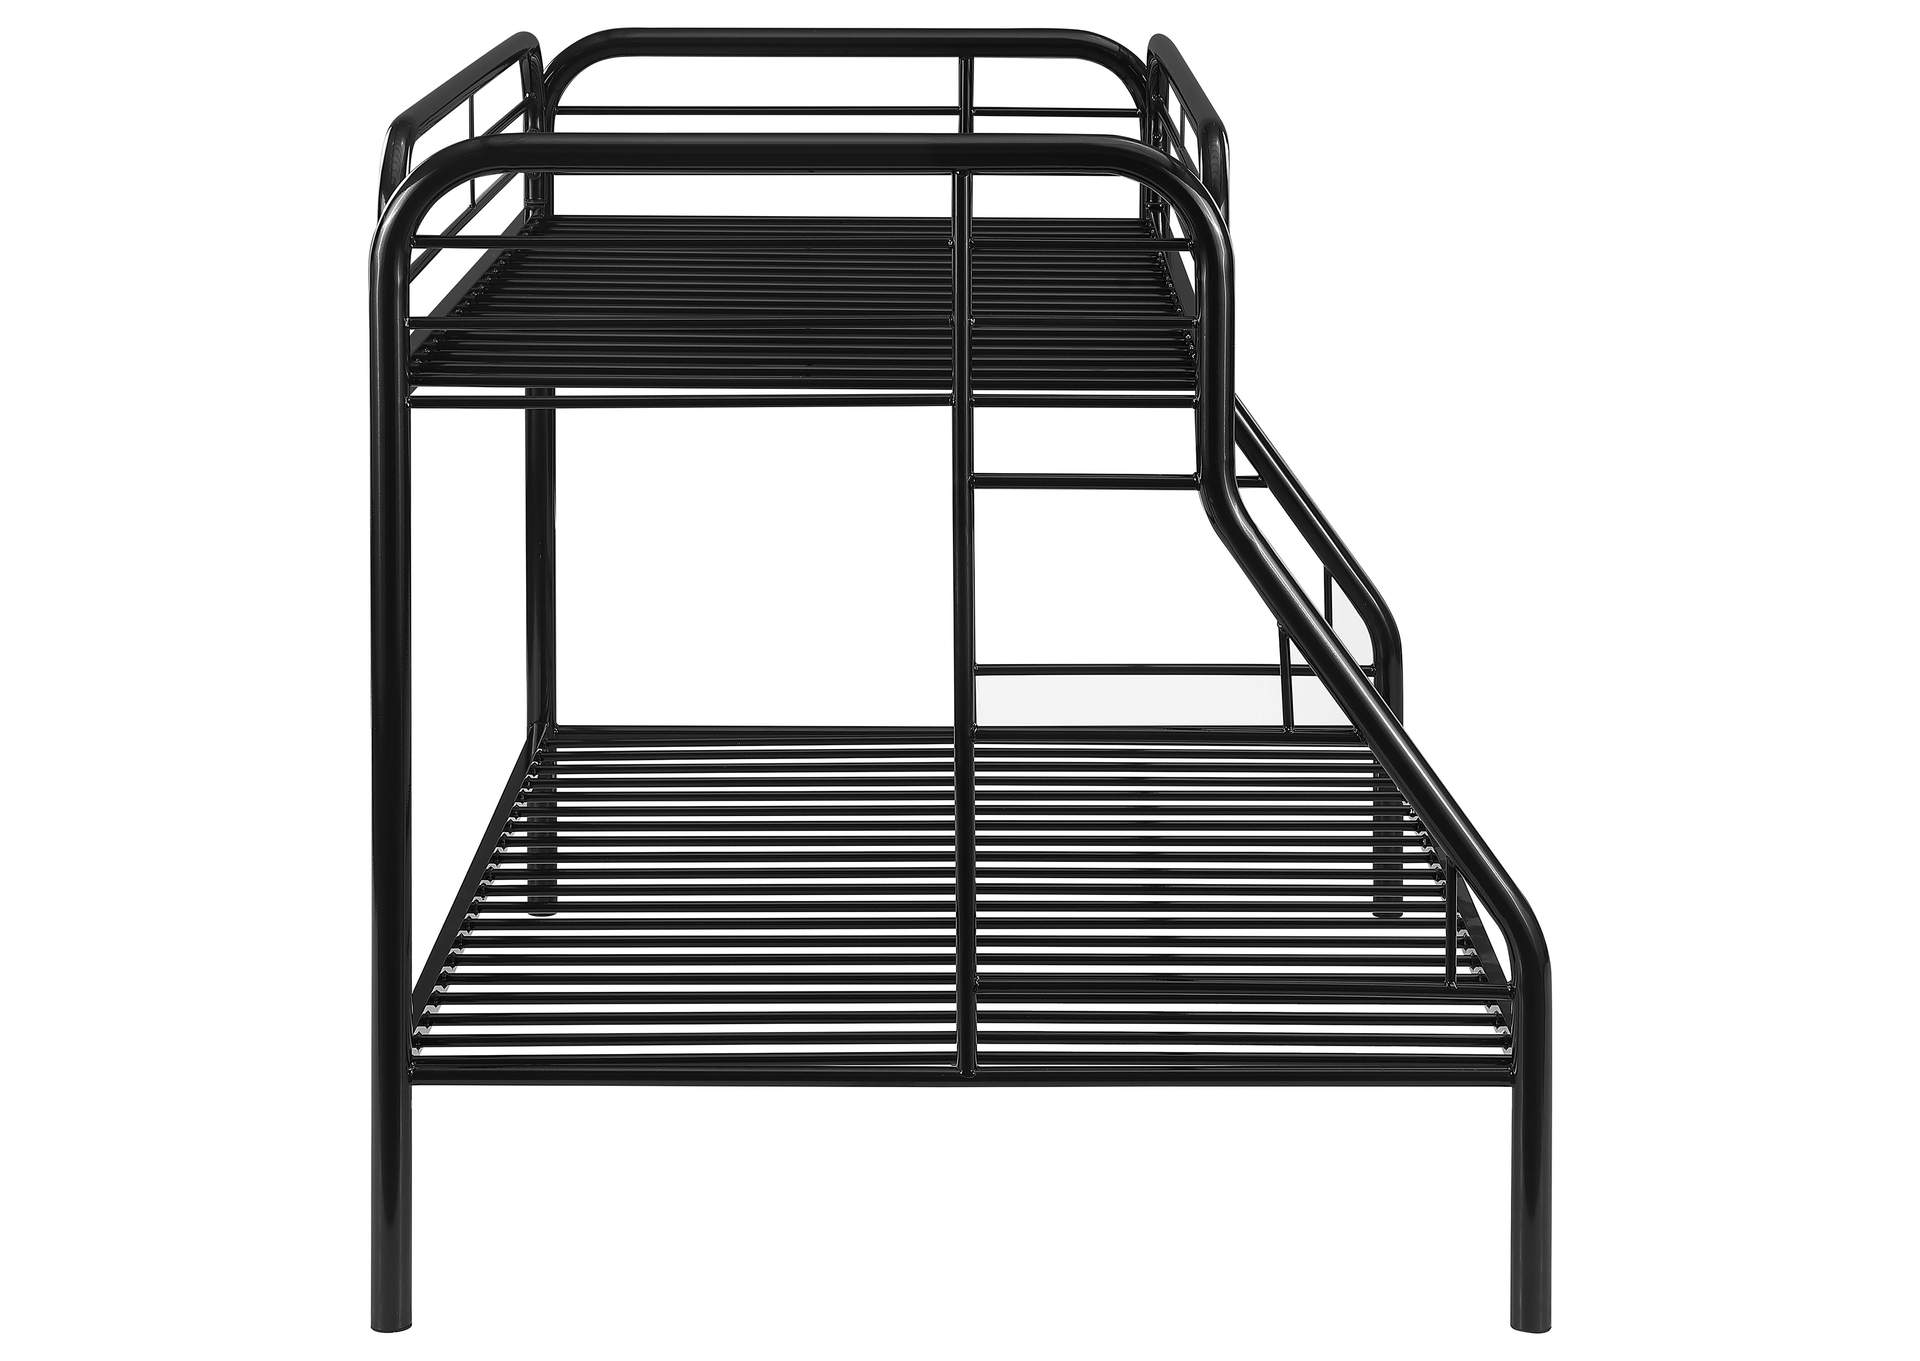 Morgan Twin over Full Bunk Bed Black,Coaster Furniture